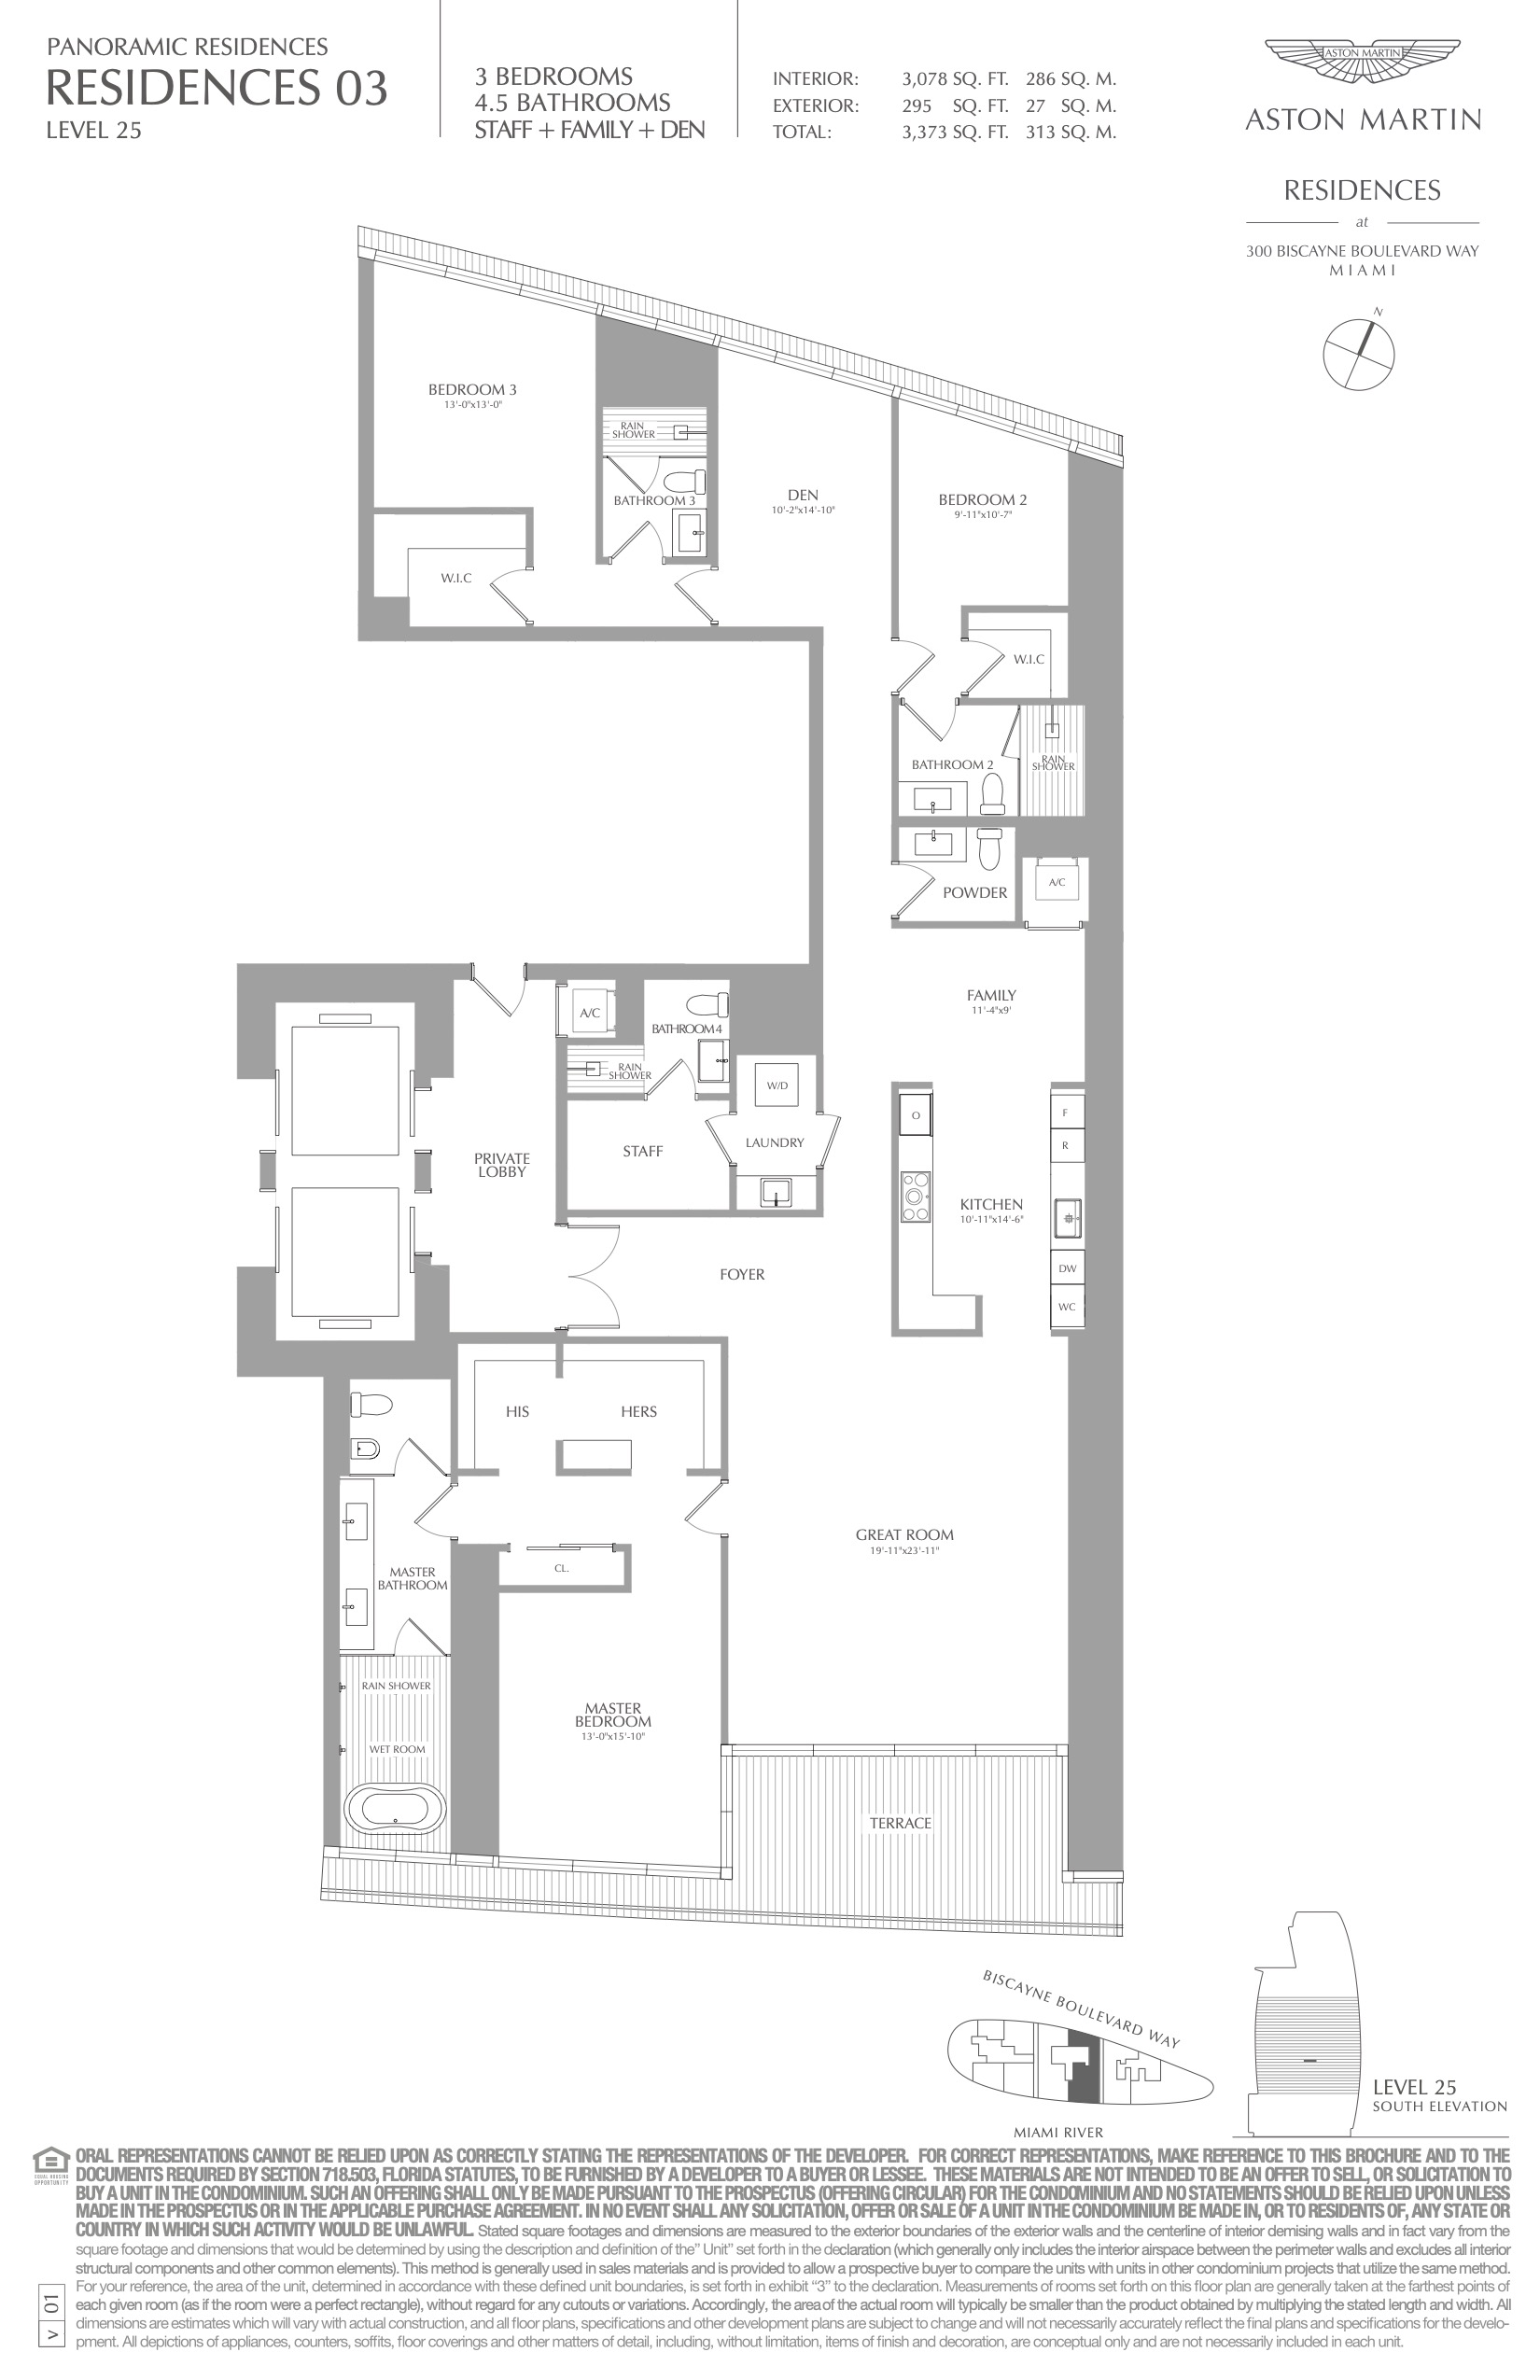 Residence 03 - Level 25